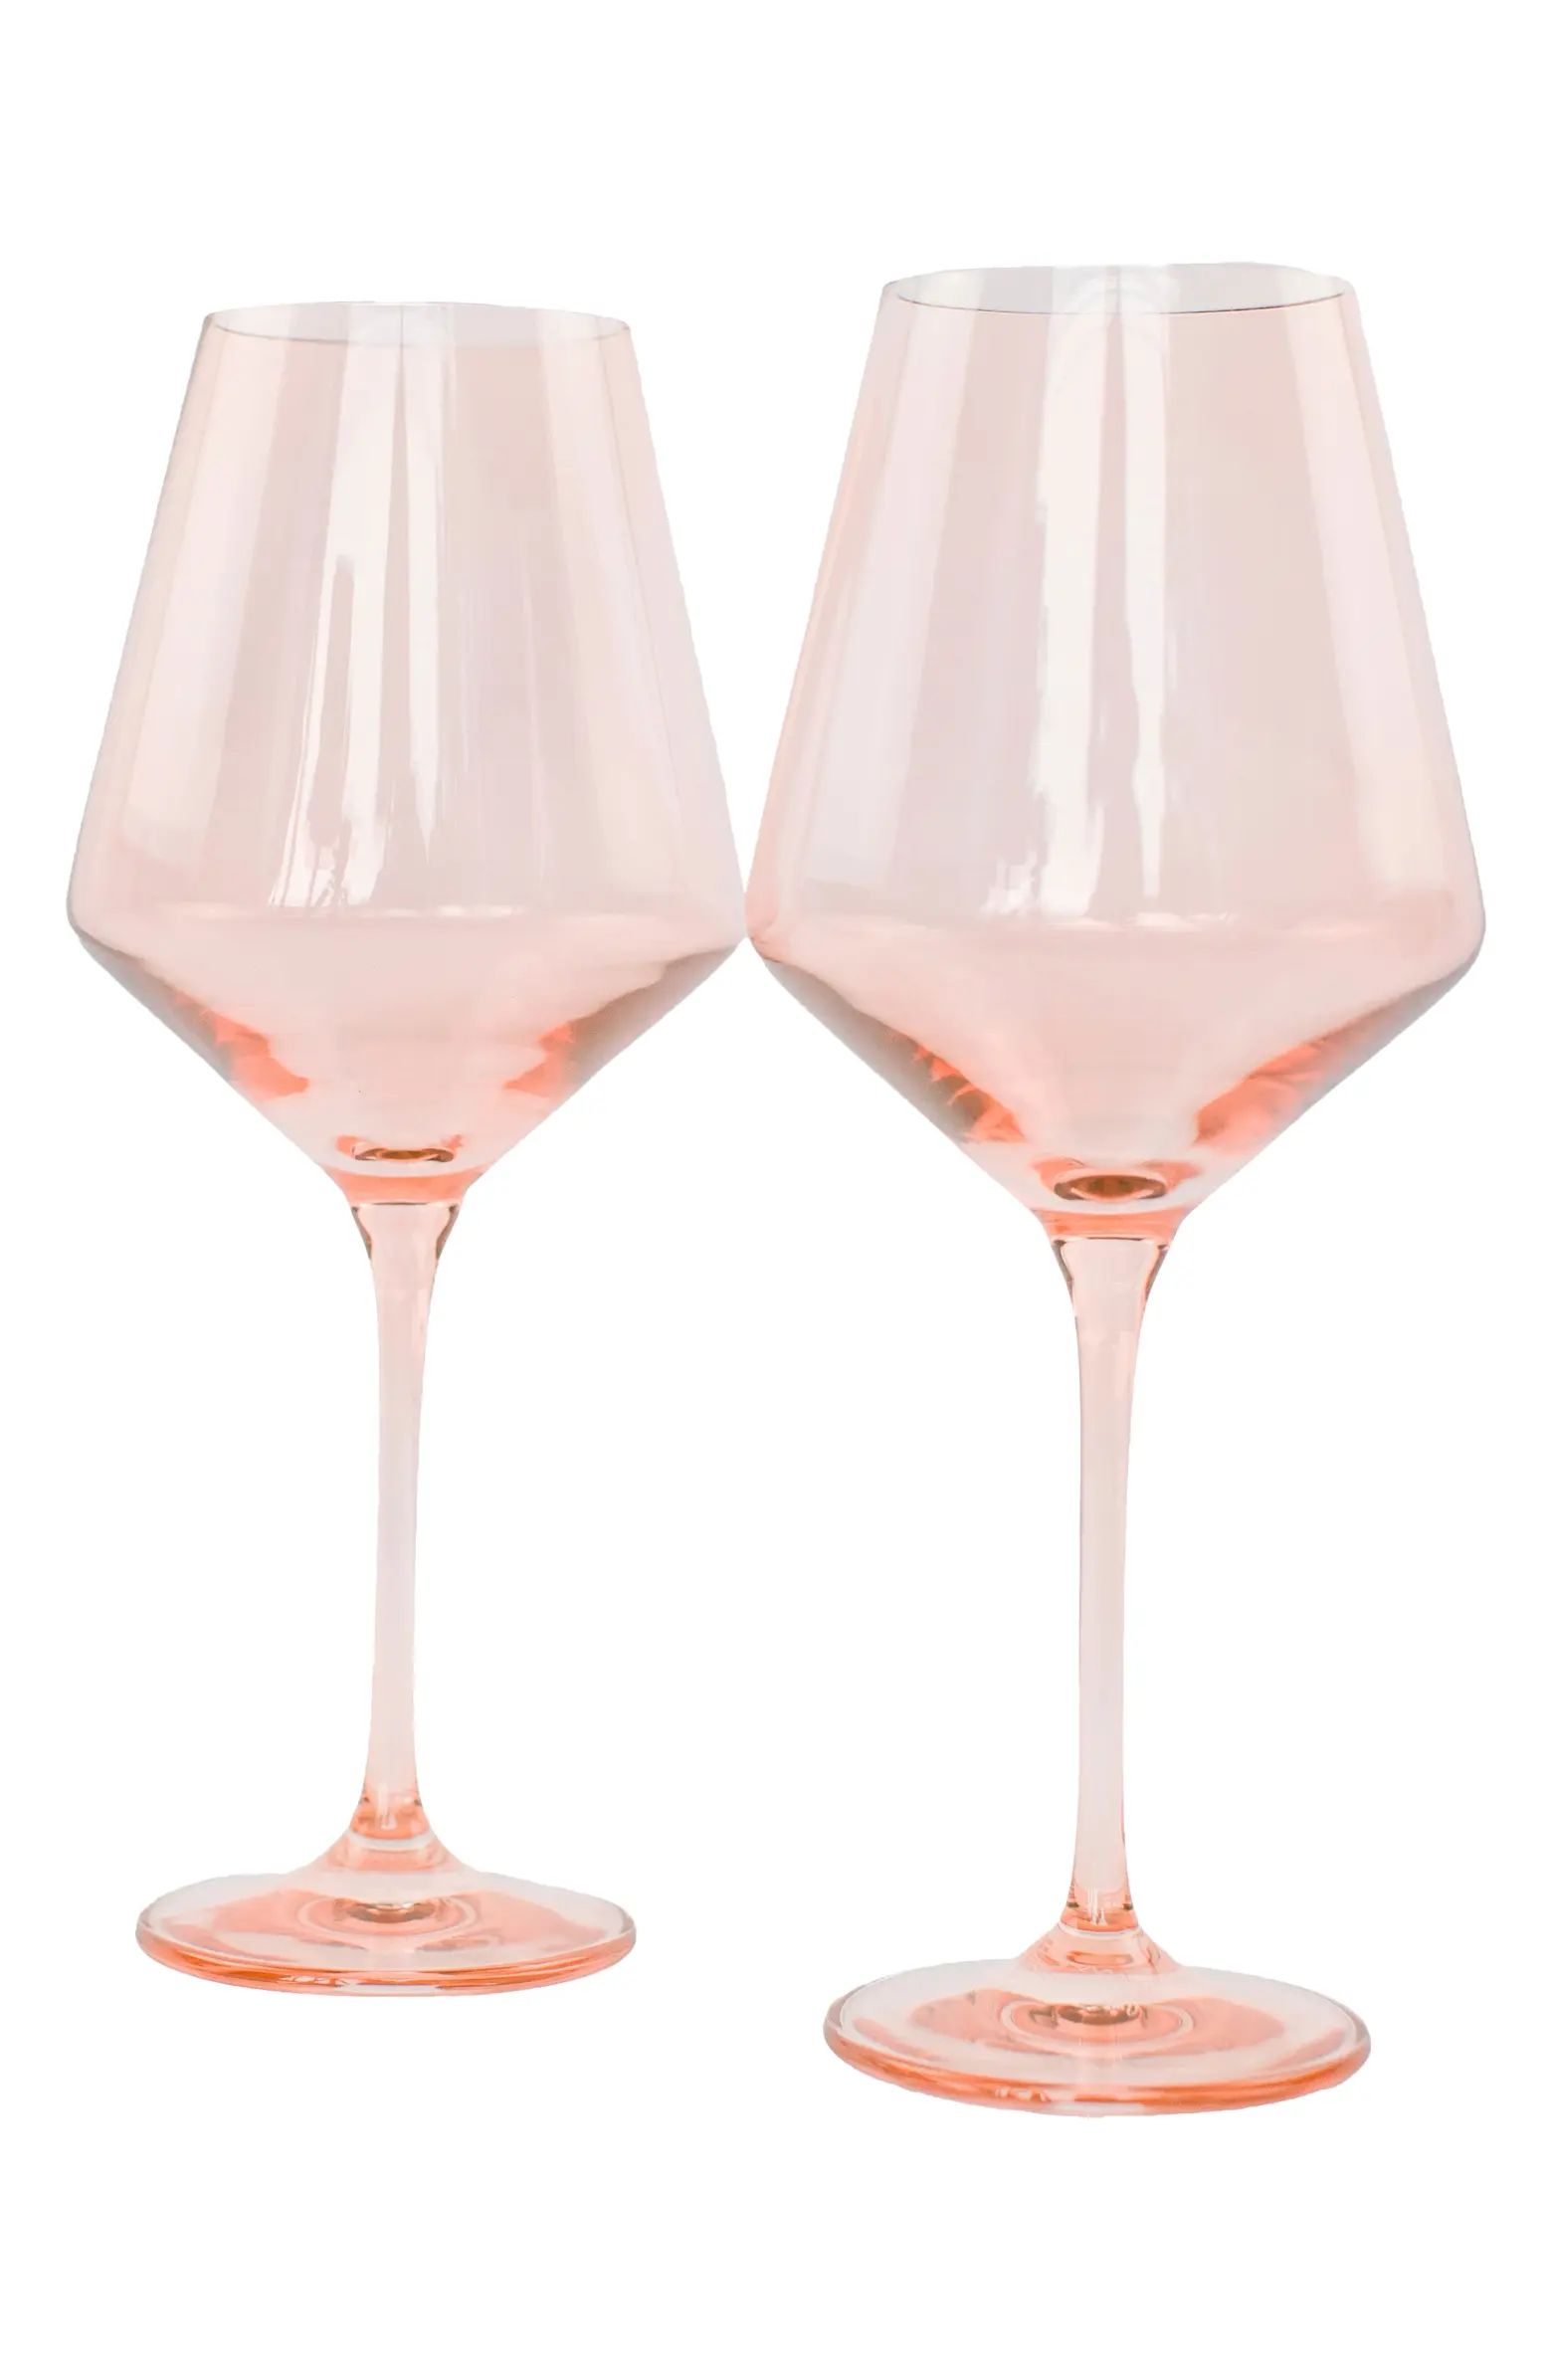 Set of 2 Stem Wineglasses | Nordstrom